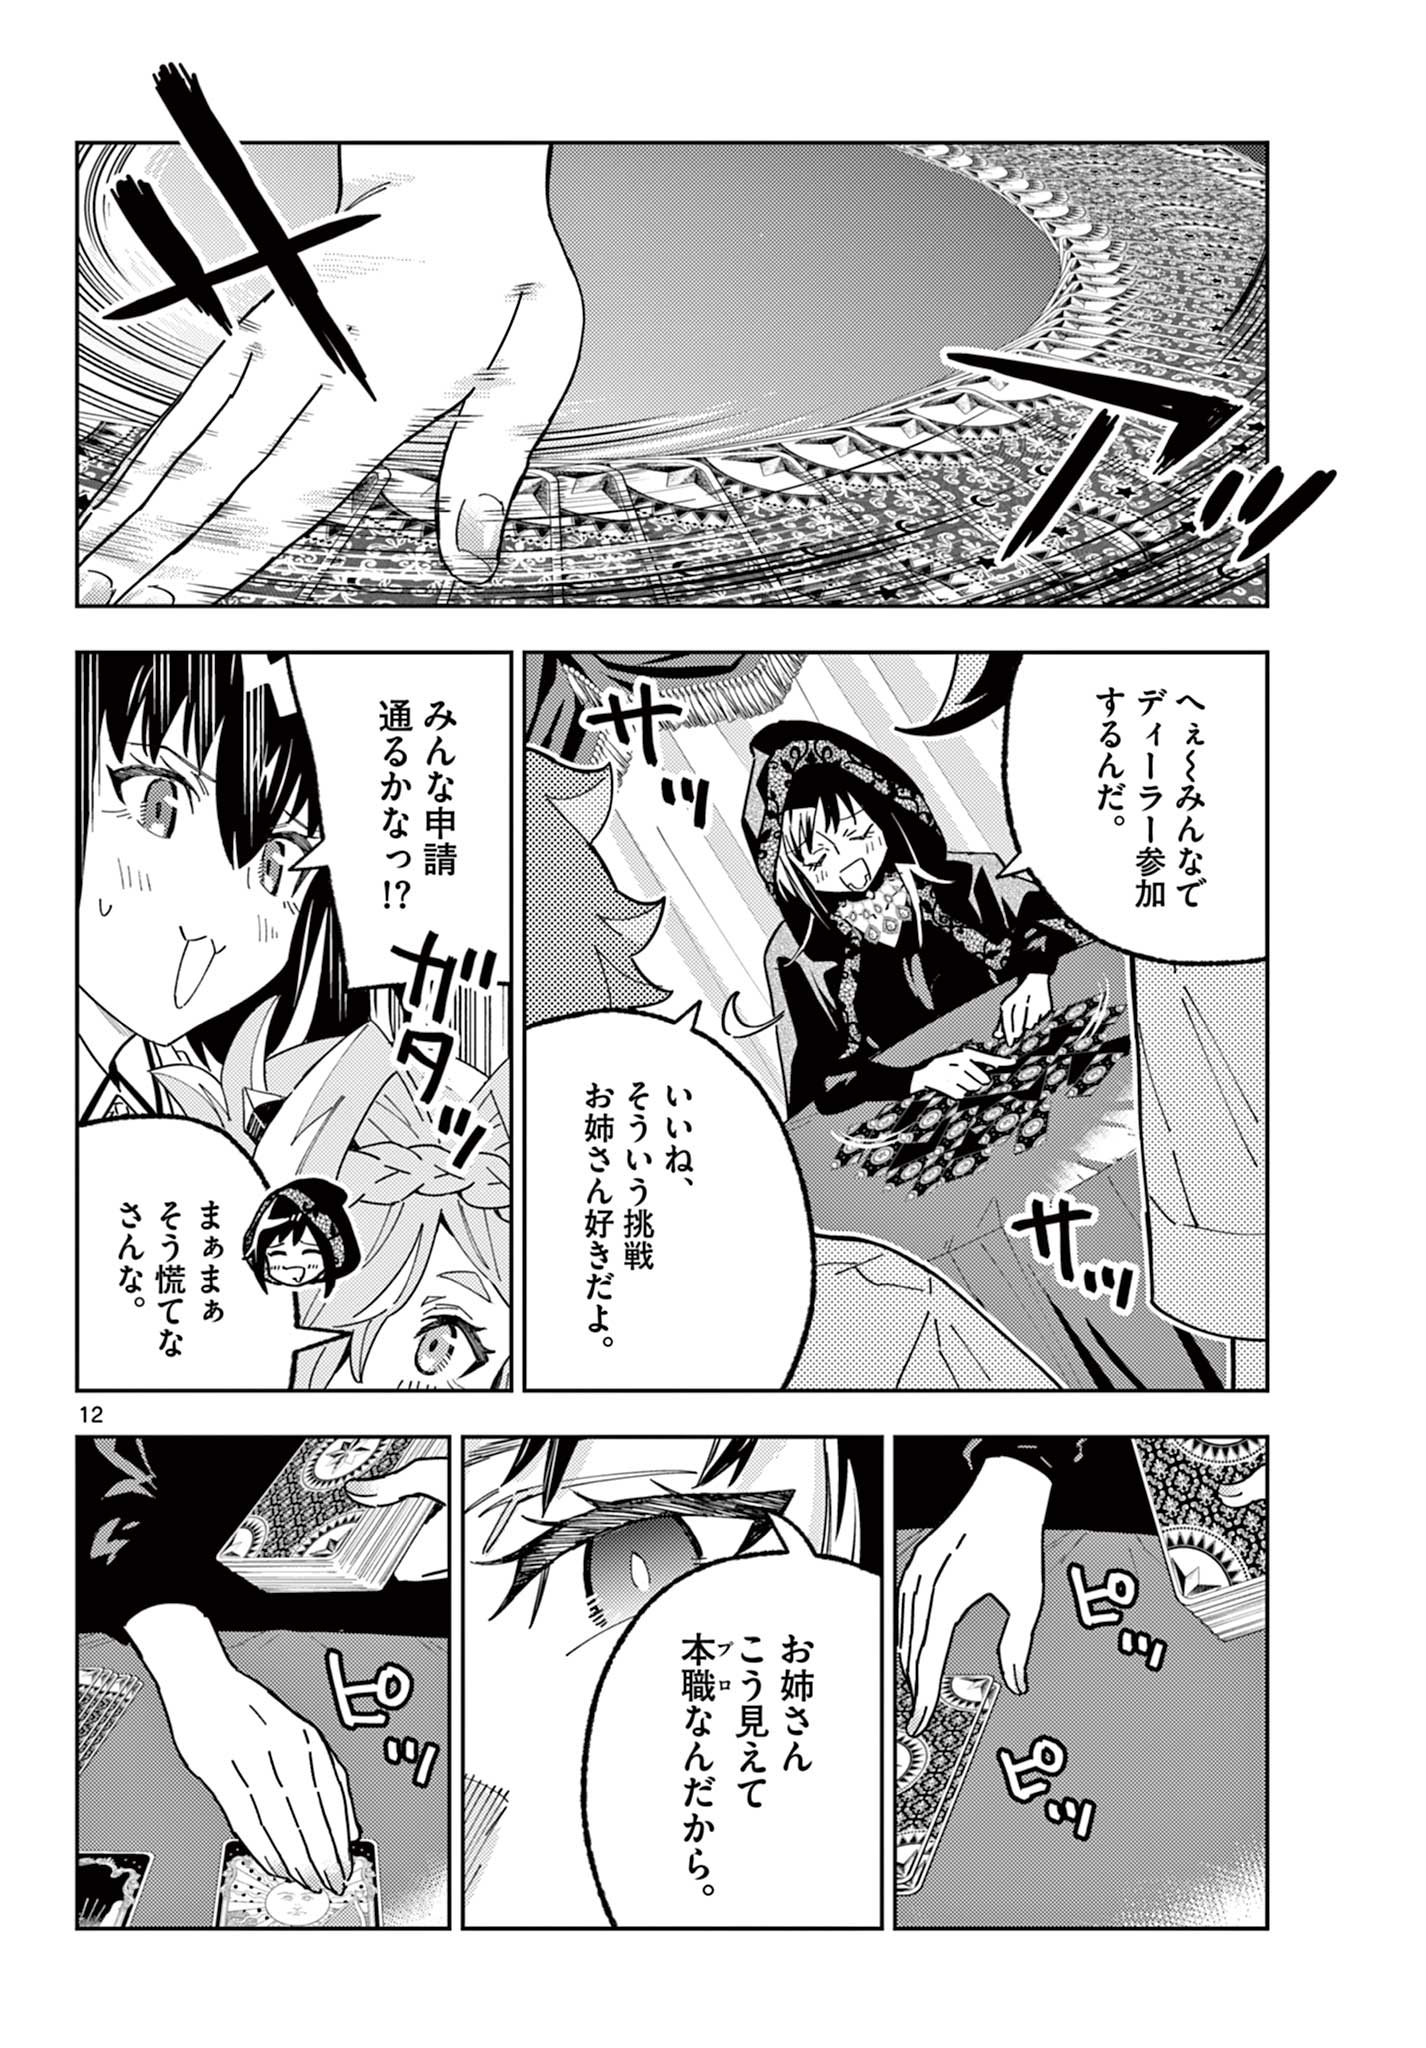 Gareki! Modeller Girls no Houkago - Chapter 19 - Page 12